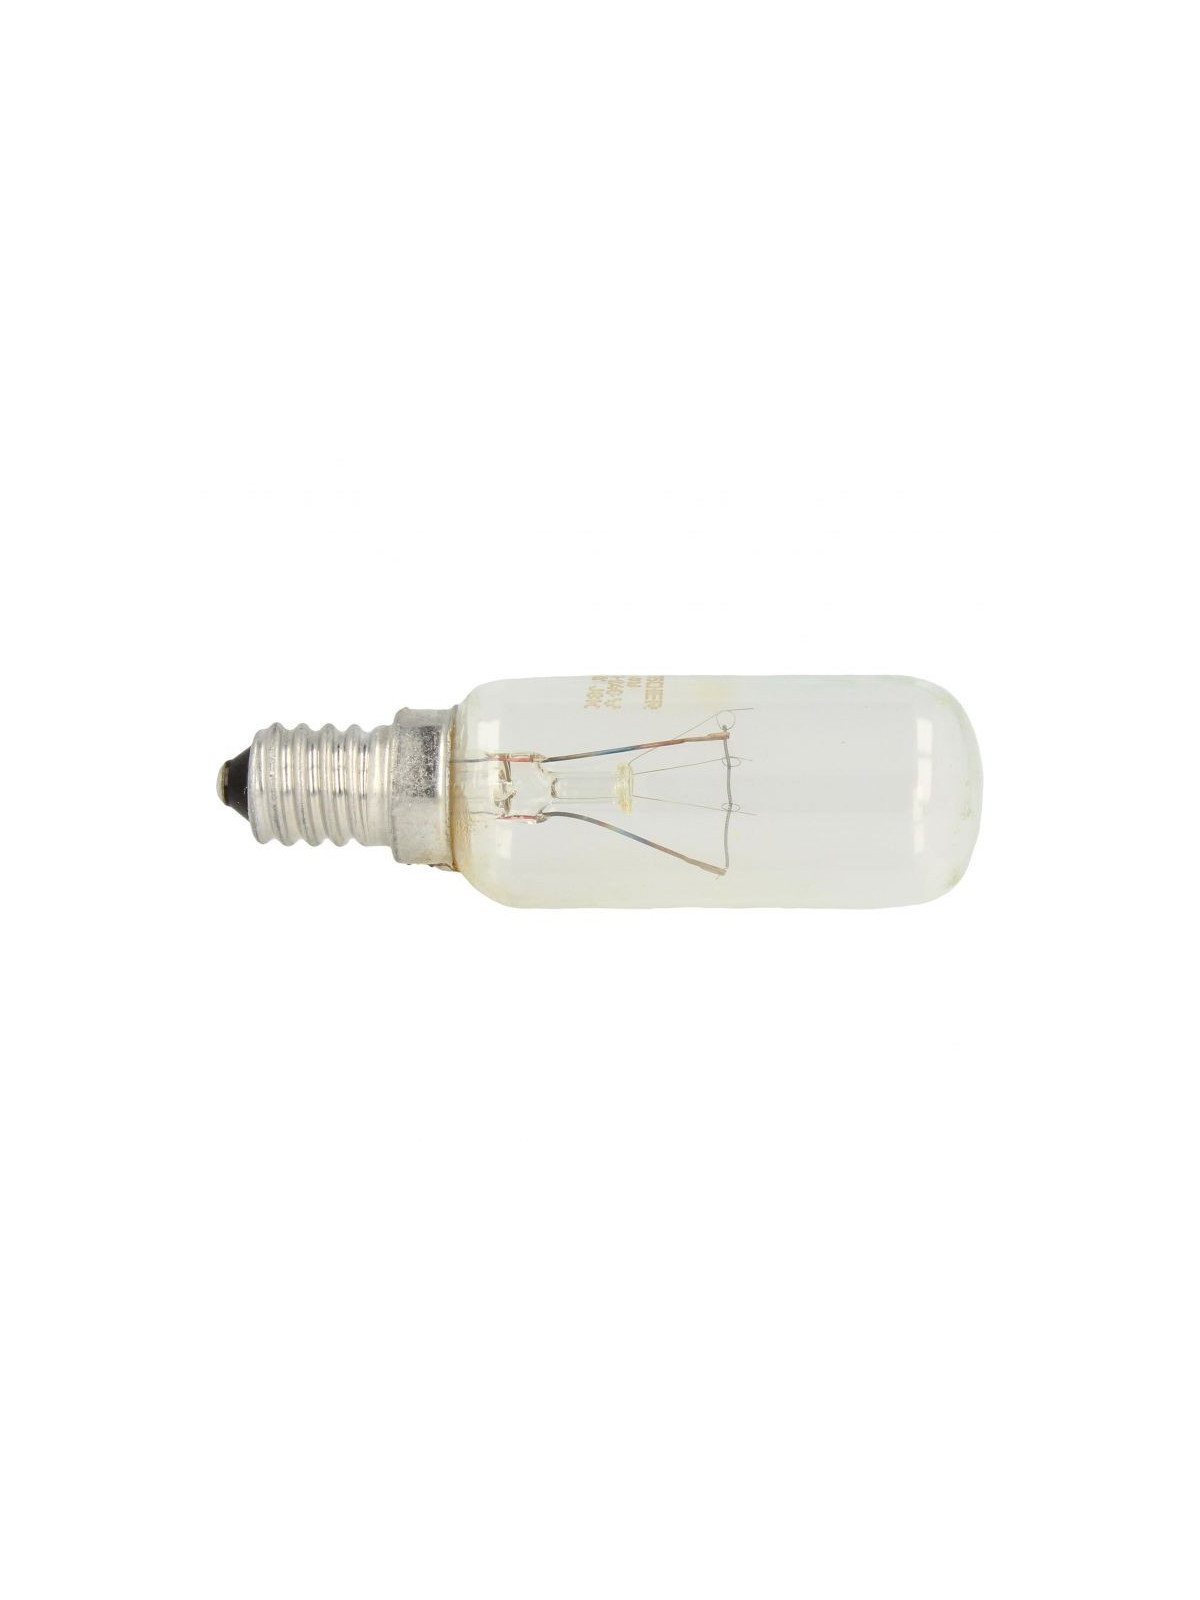 Lampe blanche 40W - E14 Bosch / Siemens - Réfrigérateur